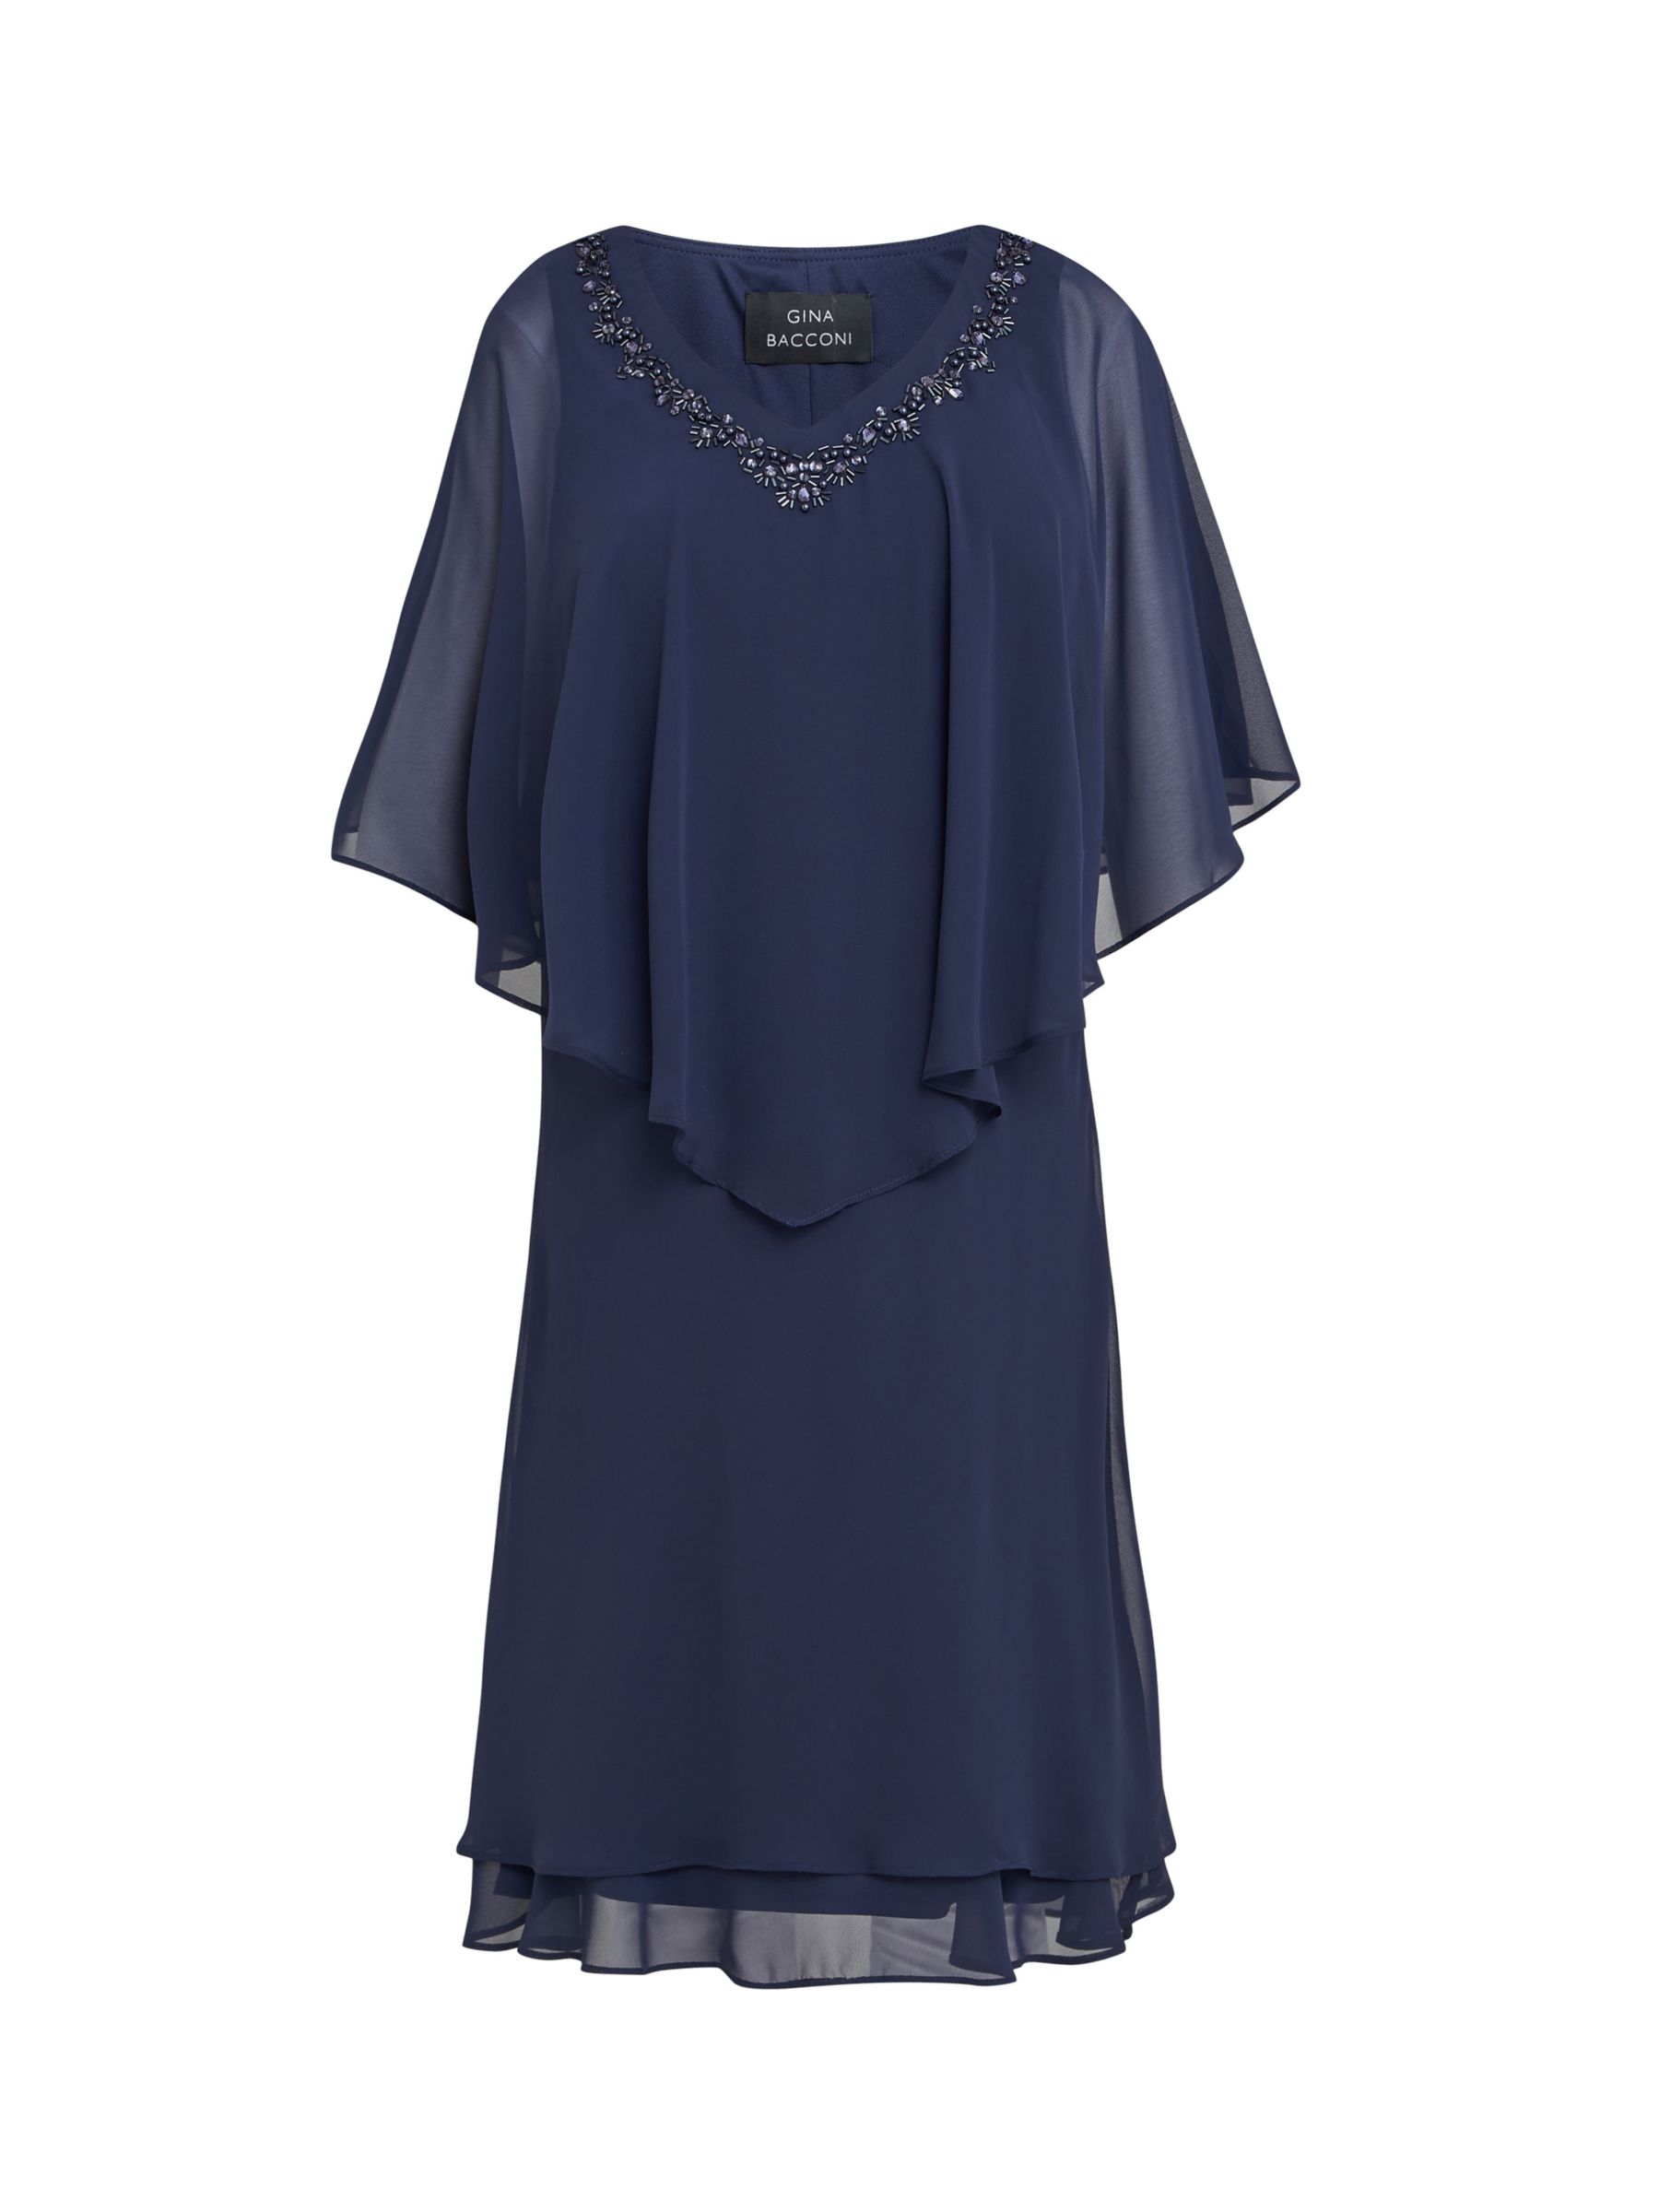 Buy Gina Bacconi Diana Cape Chiffon Dress, Spring Navy Online at johnlewis.com